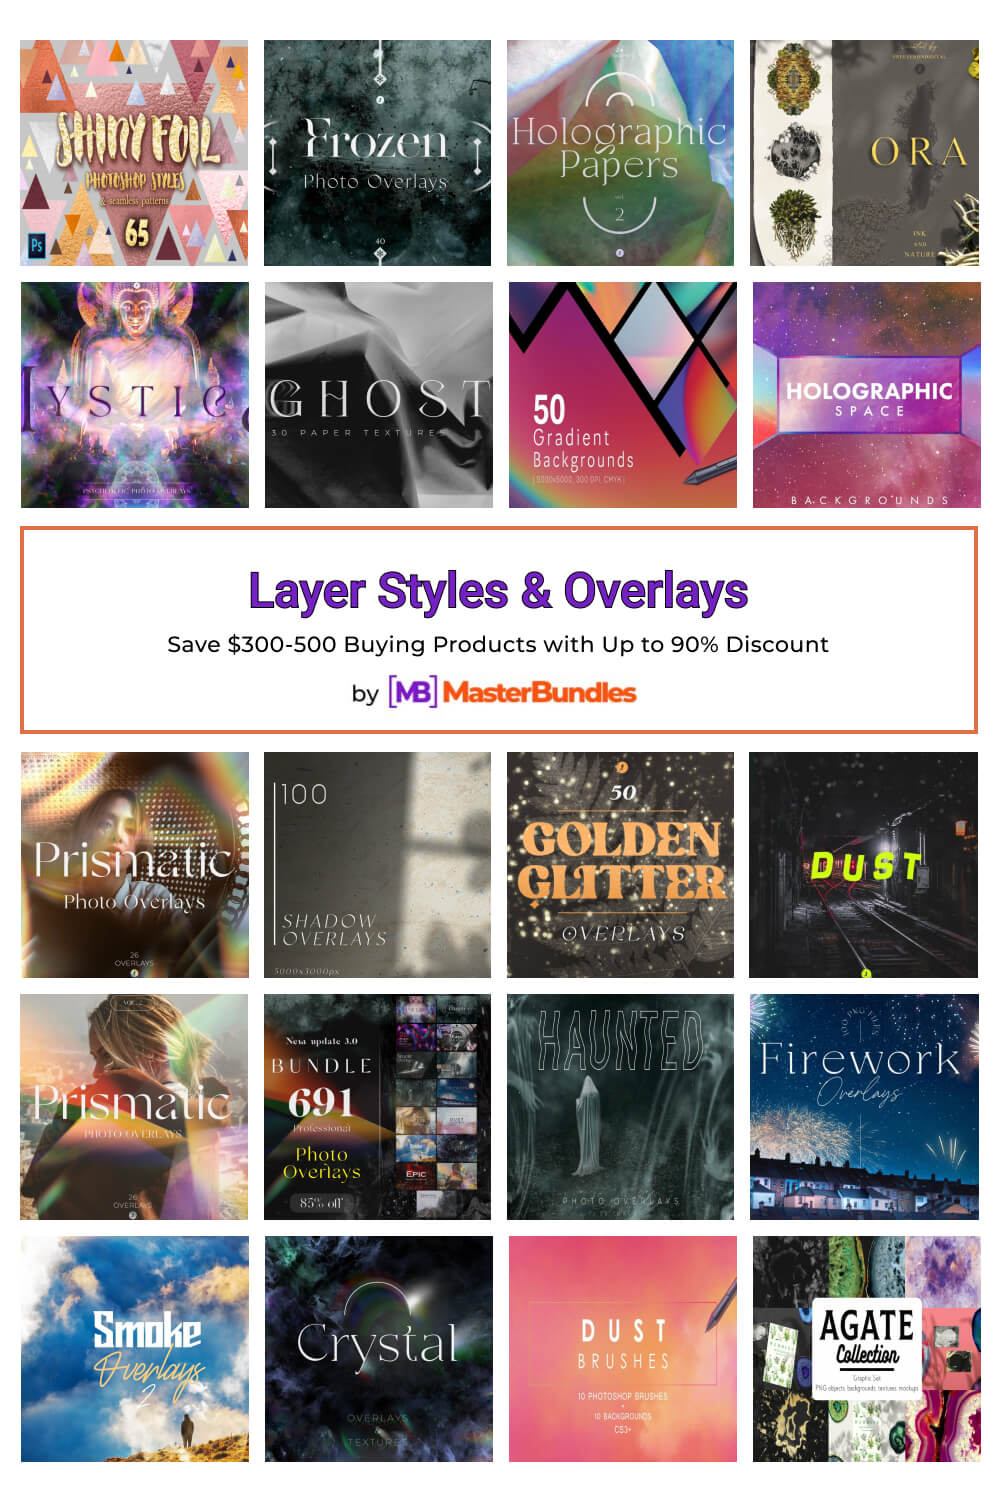 layer styles overlays pinterest image.